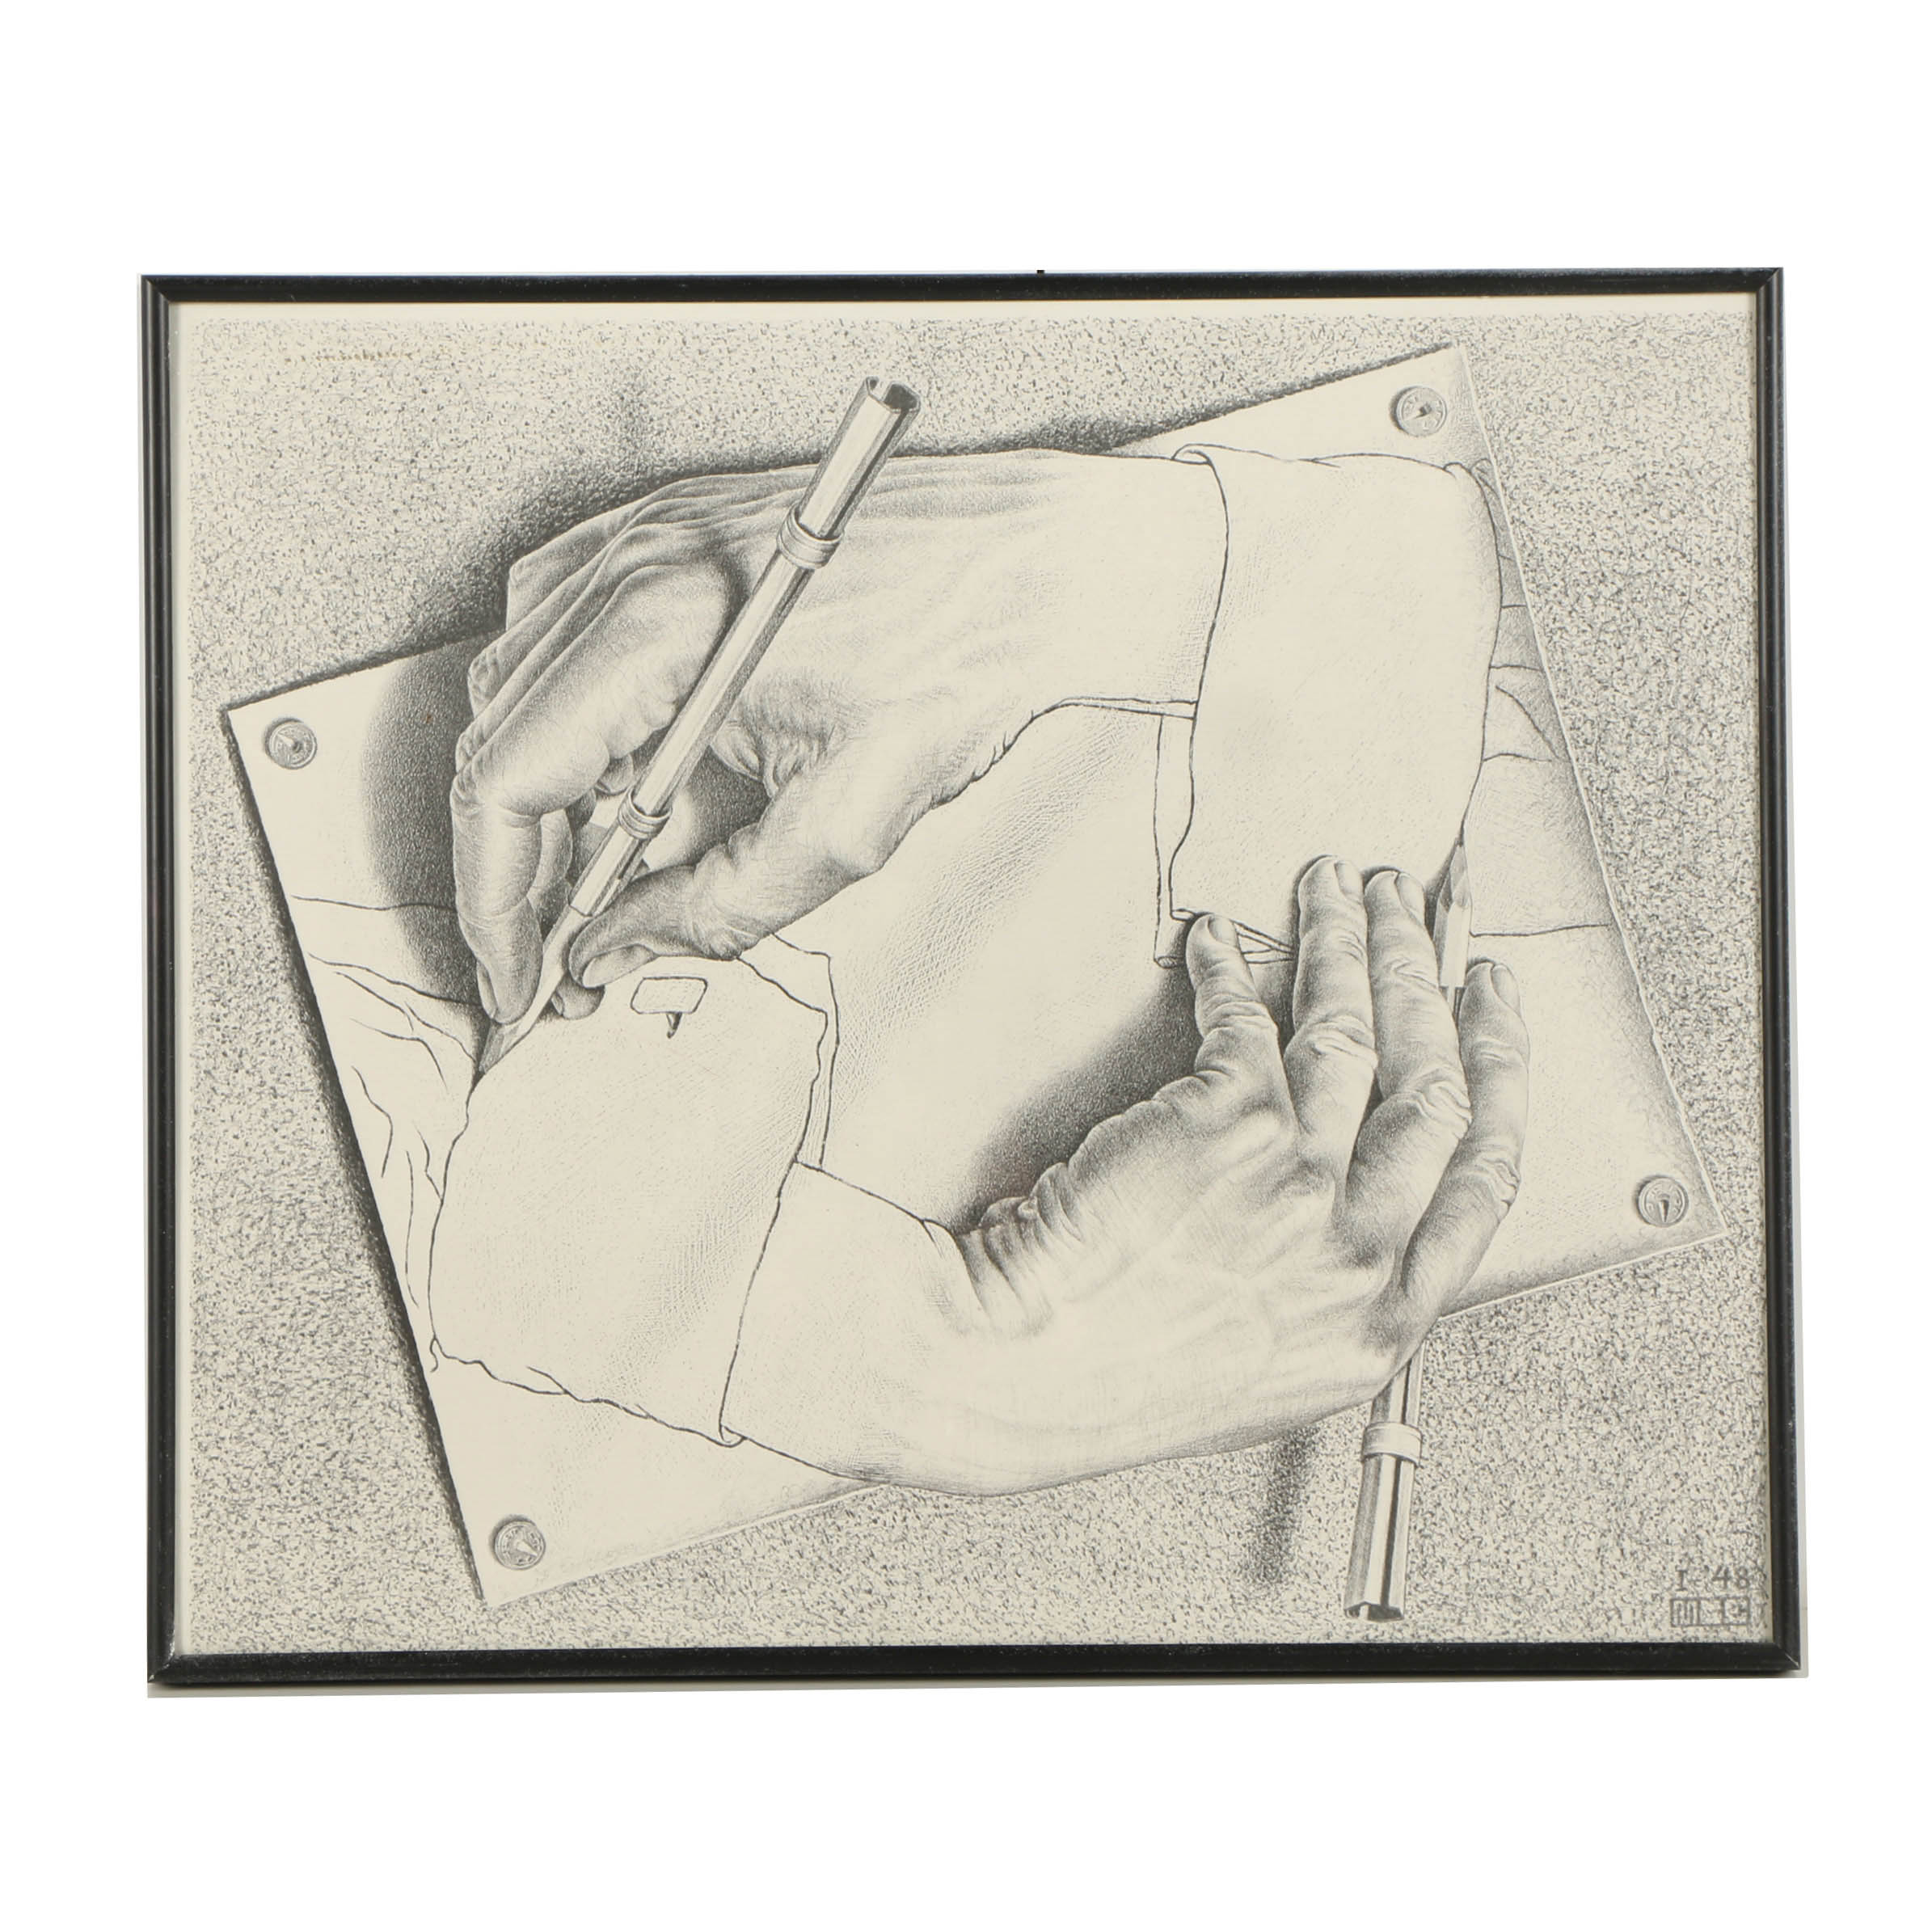 Escher Hands Drawing Each Other at Explore